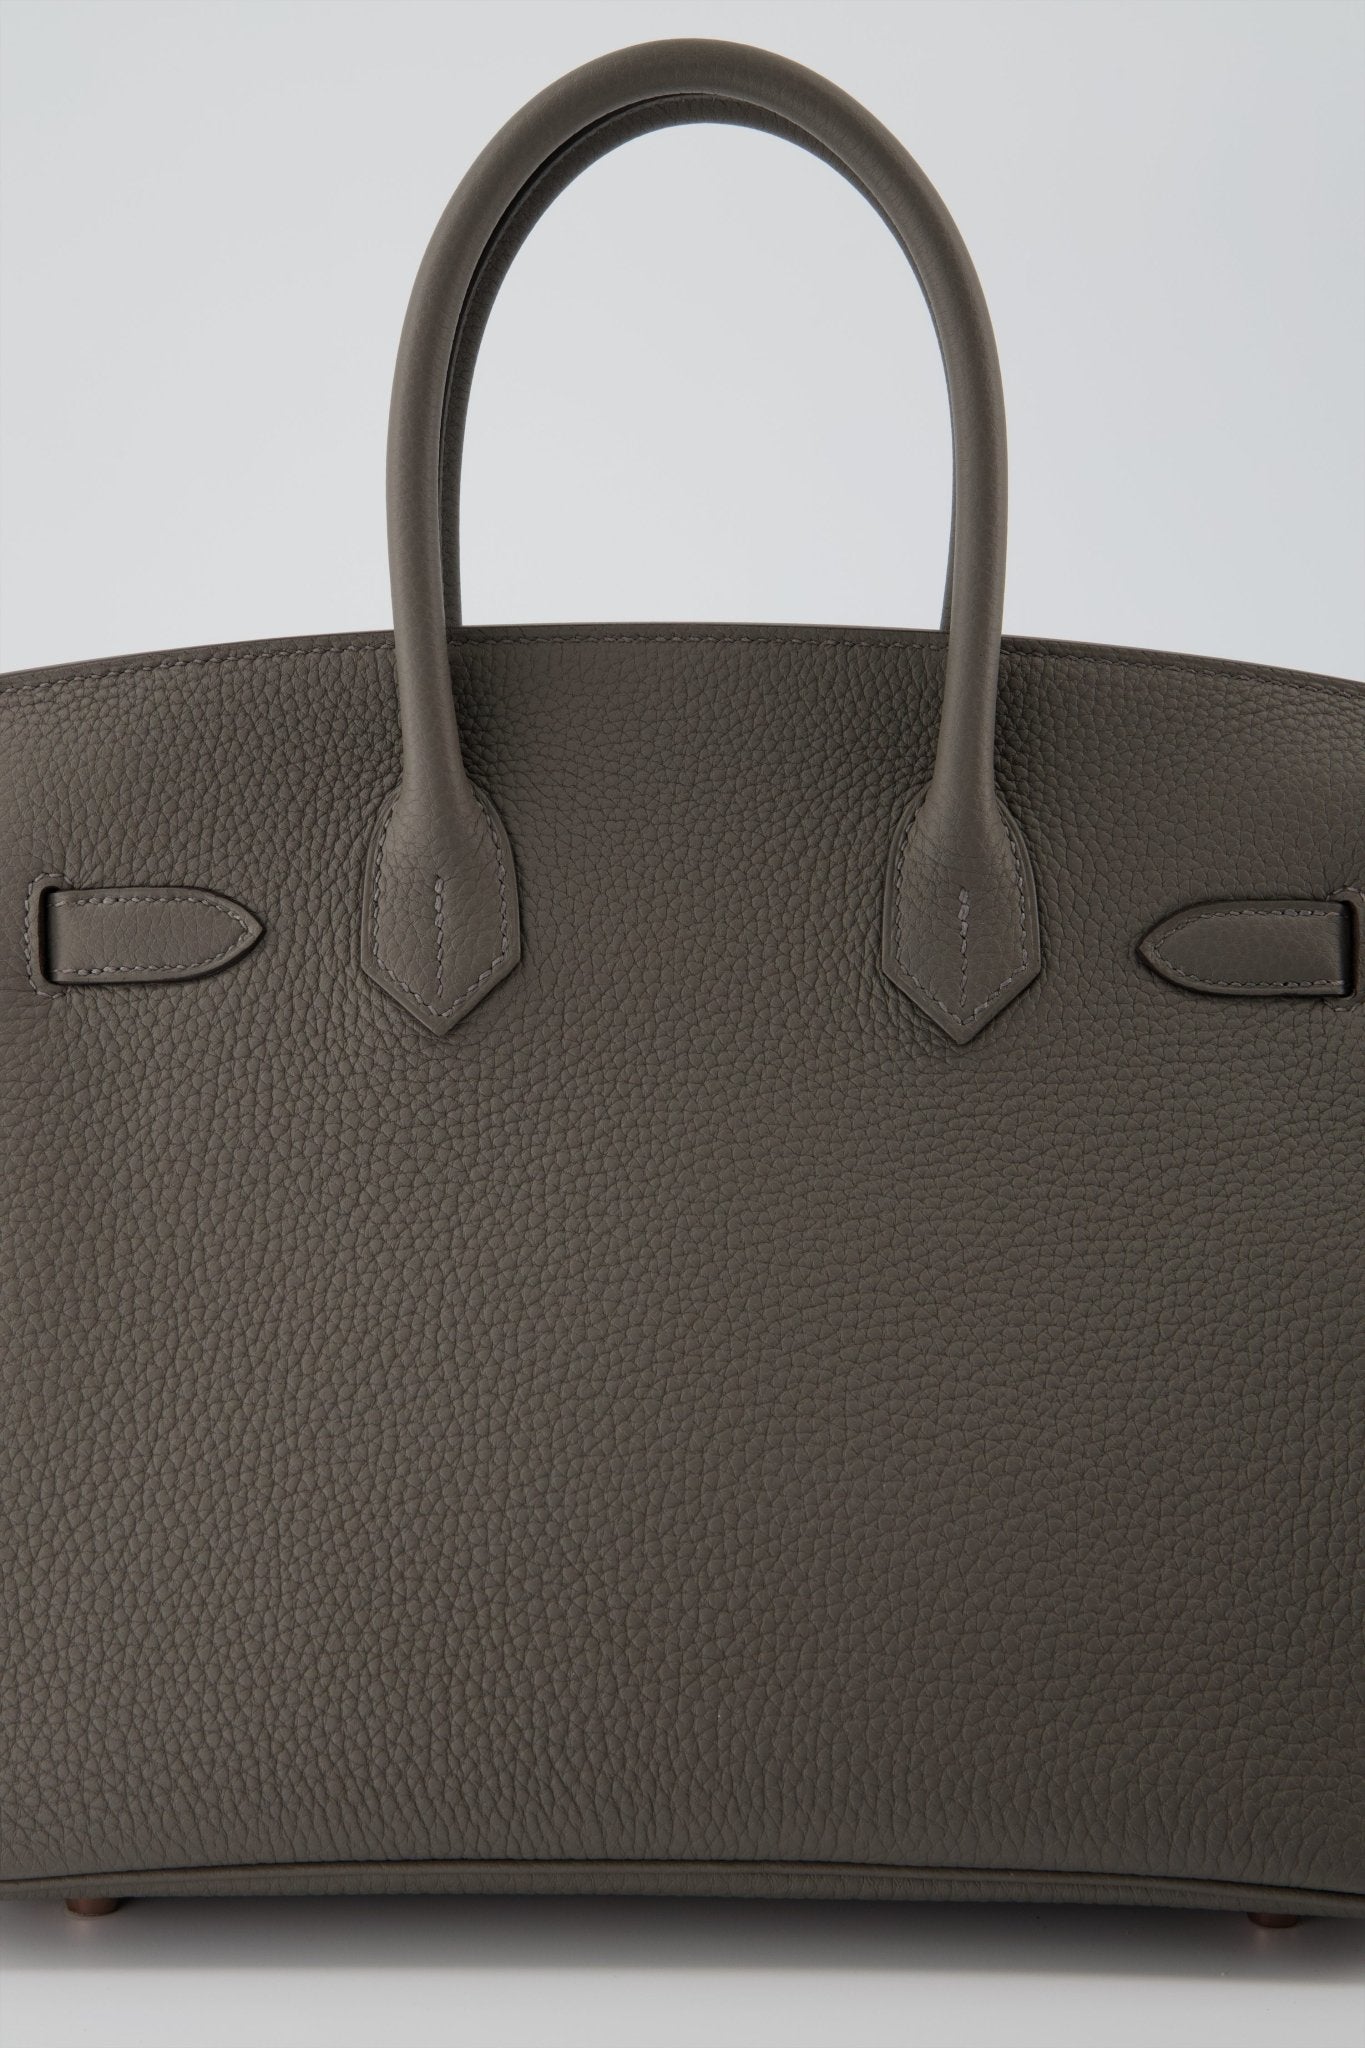 Hermès - Birkin 30 - Etain - Brand New